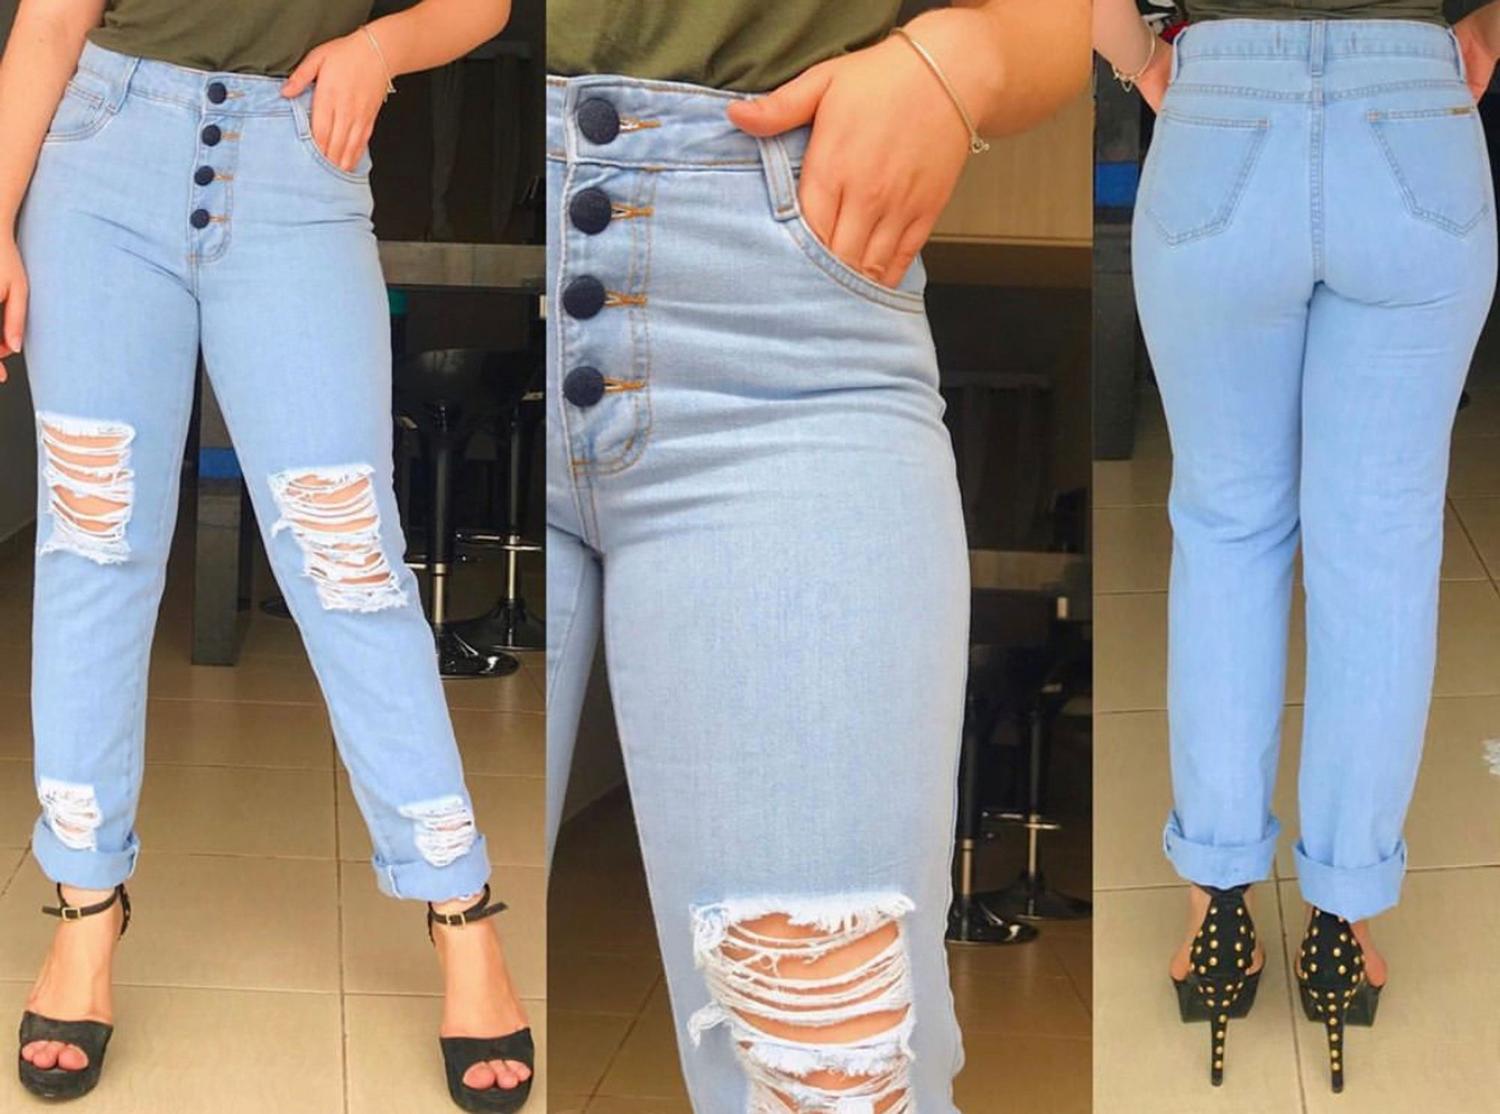 calça jeans feminina tamanho 50